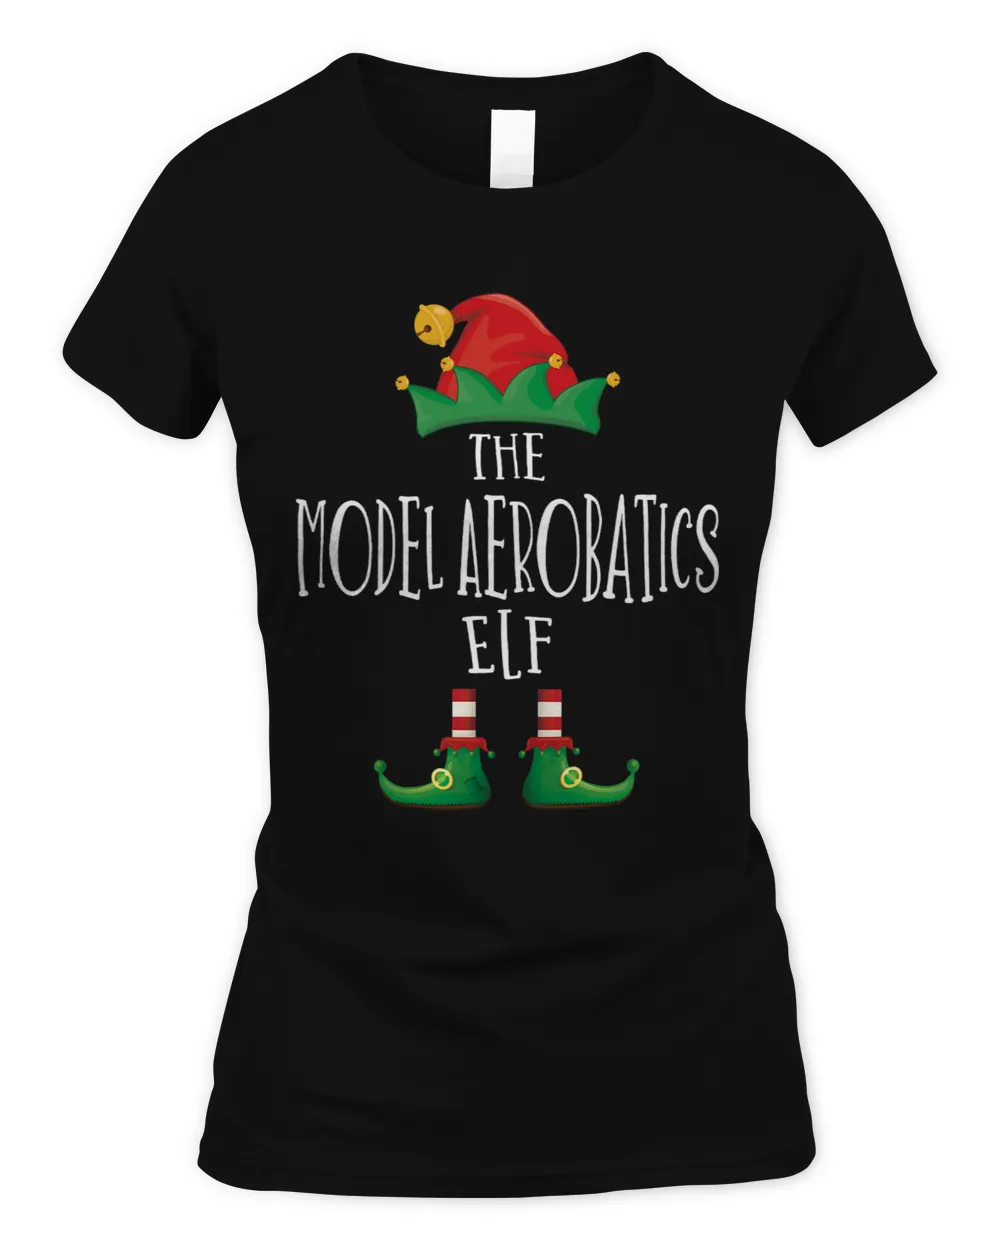 Model Aerobatics Elf Shirt Family Matching Group Christmas